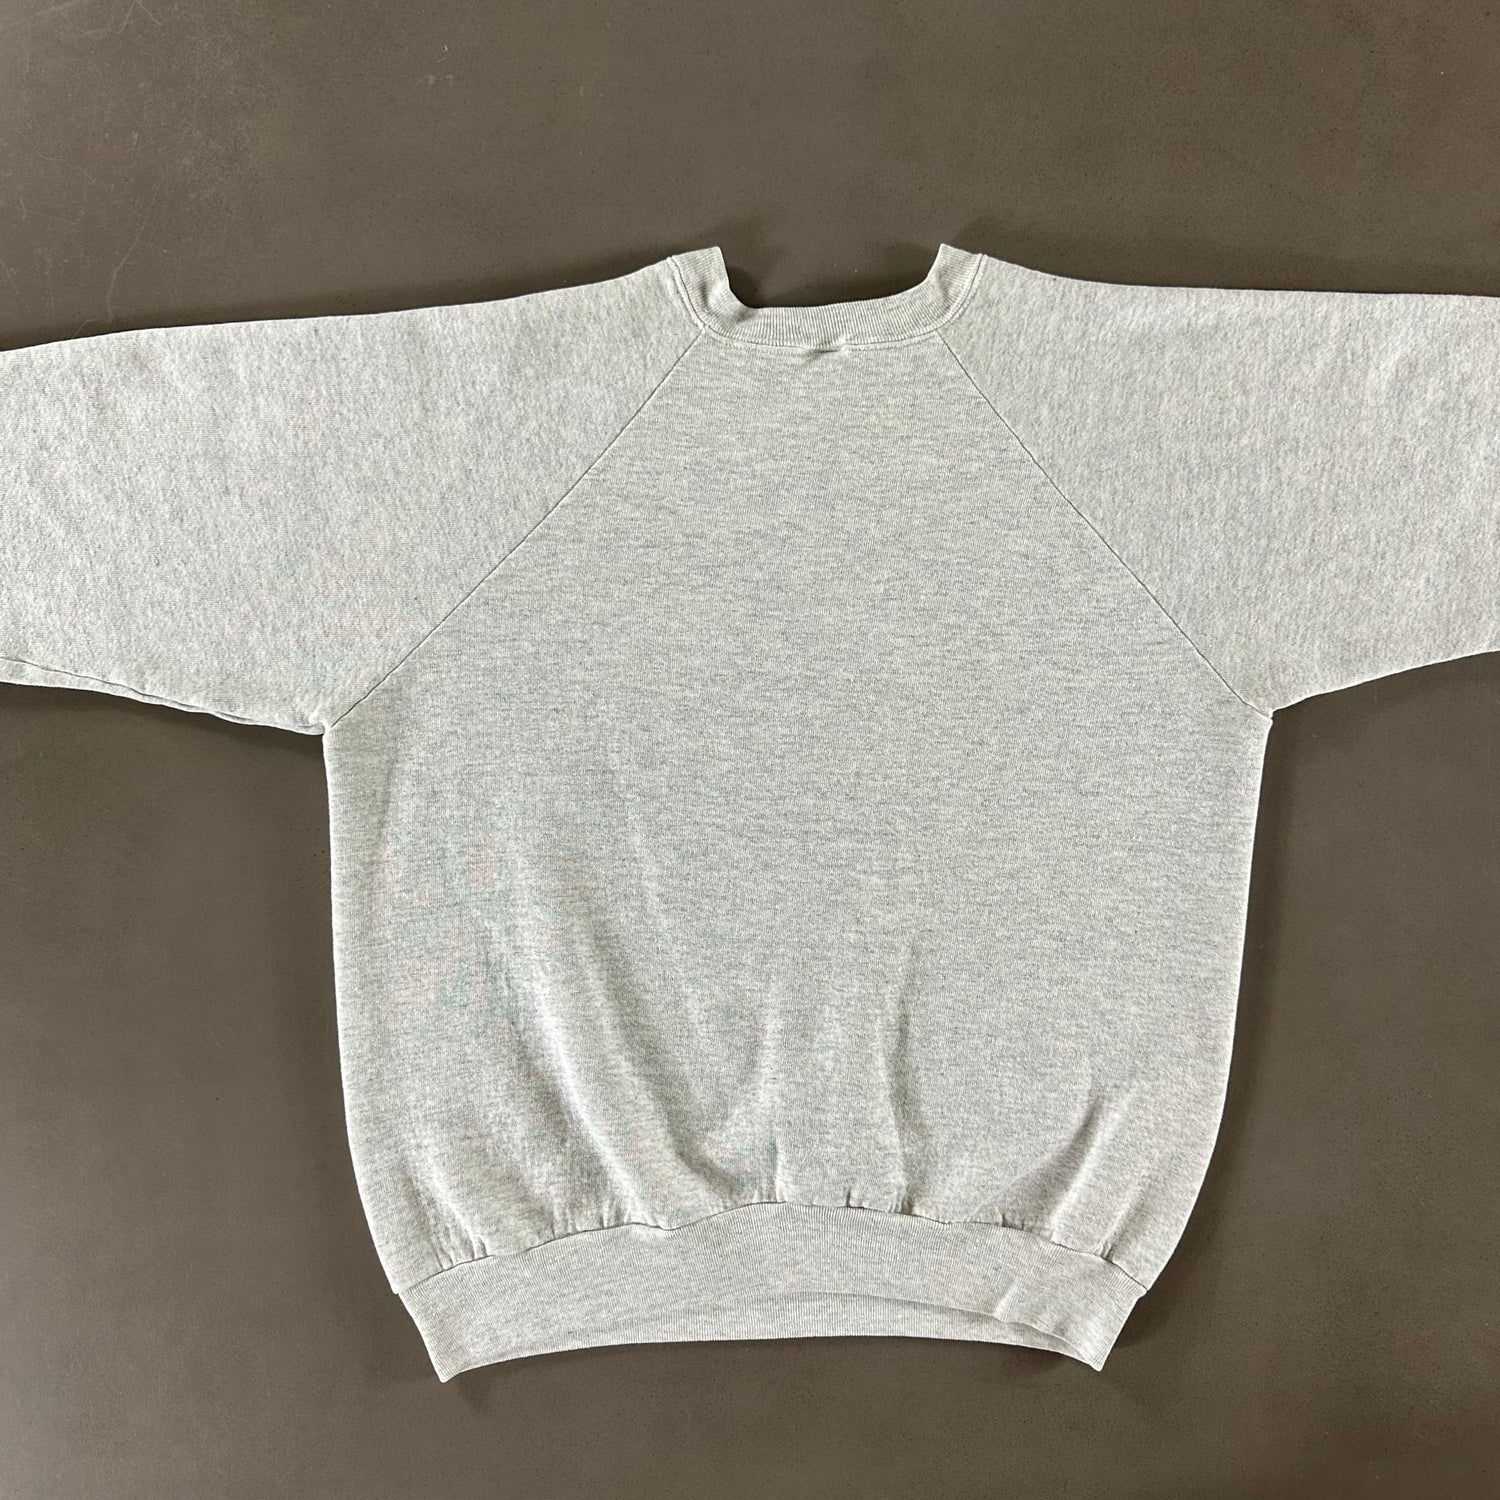 Vintage 1990s New Orleans Sweatshirt size Large